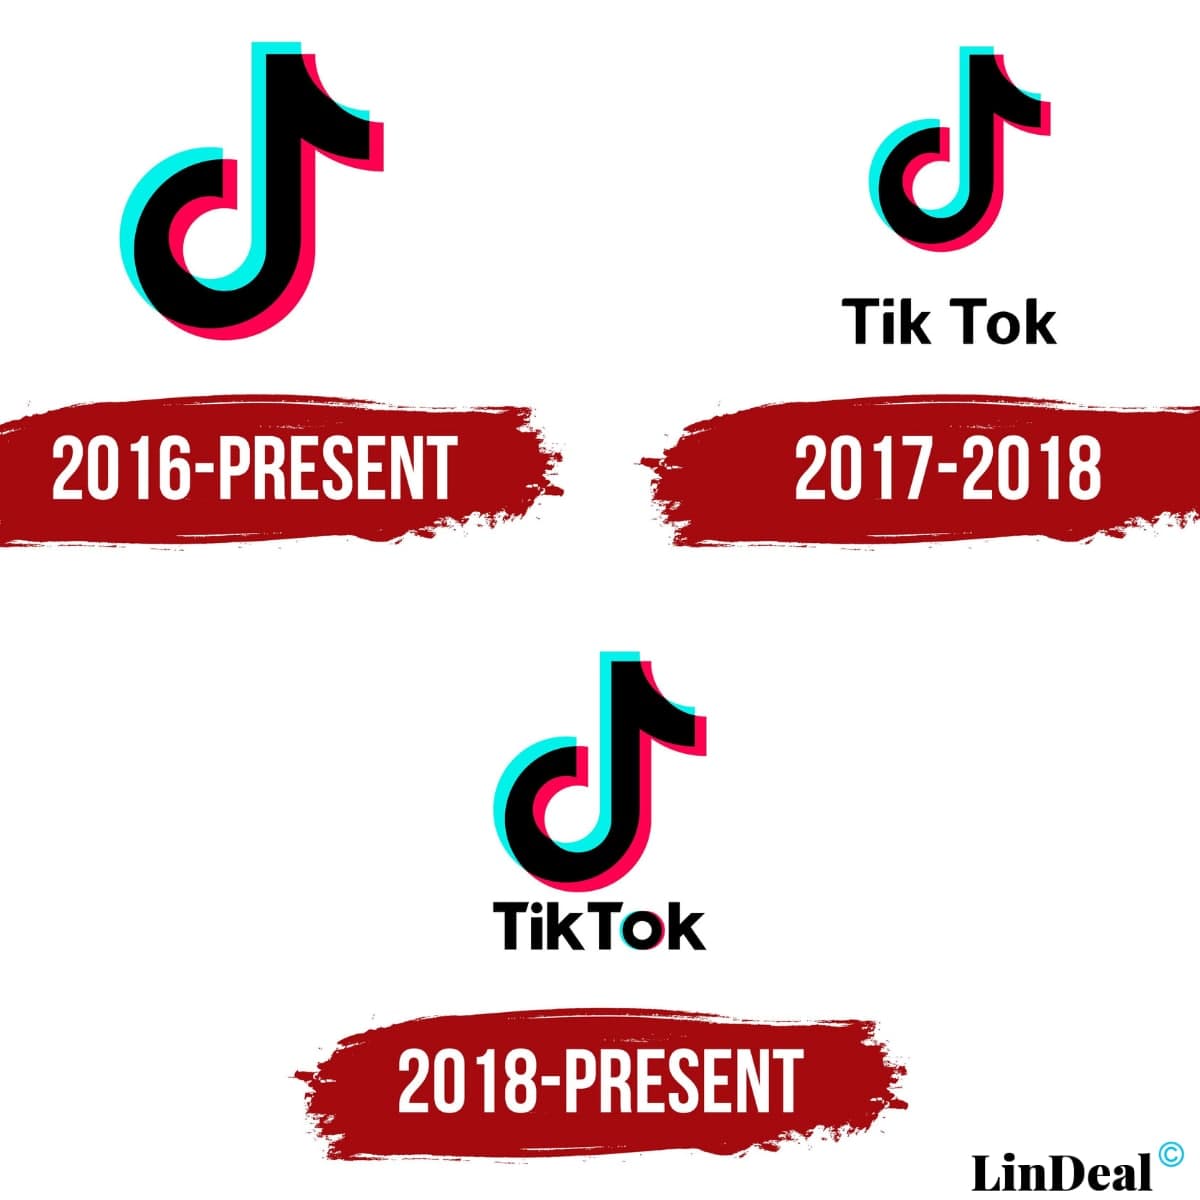 Почему TikTok: что значит логотип